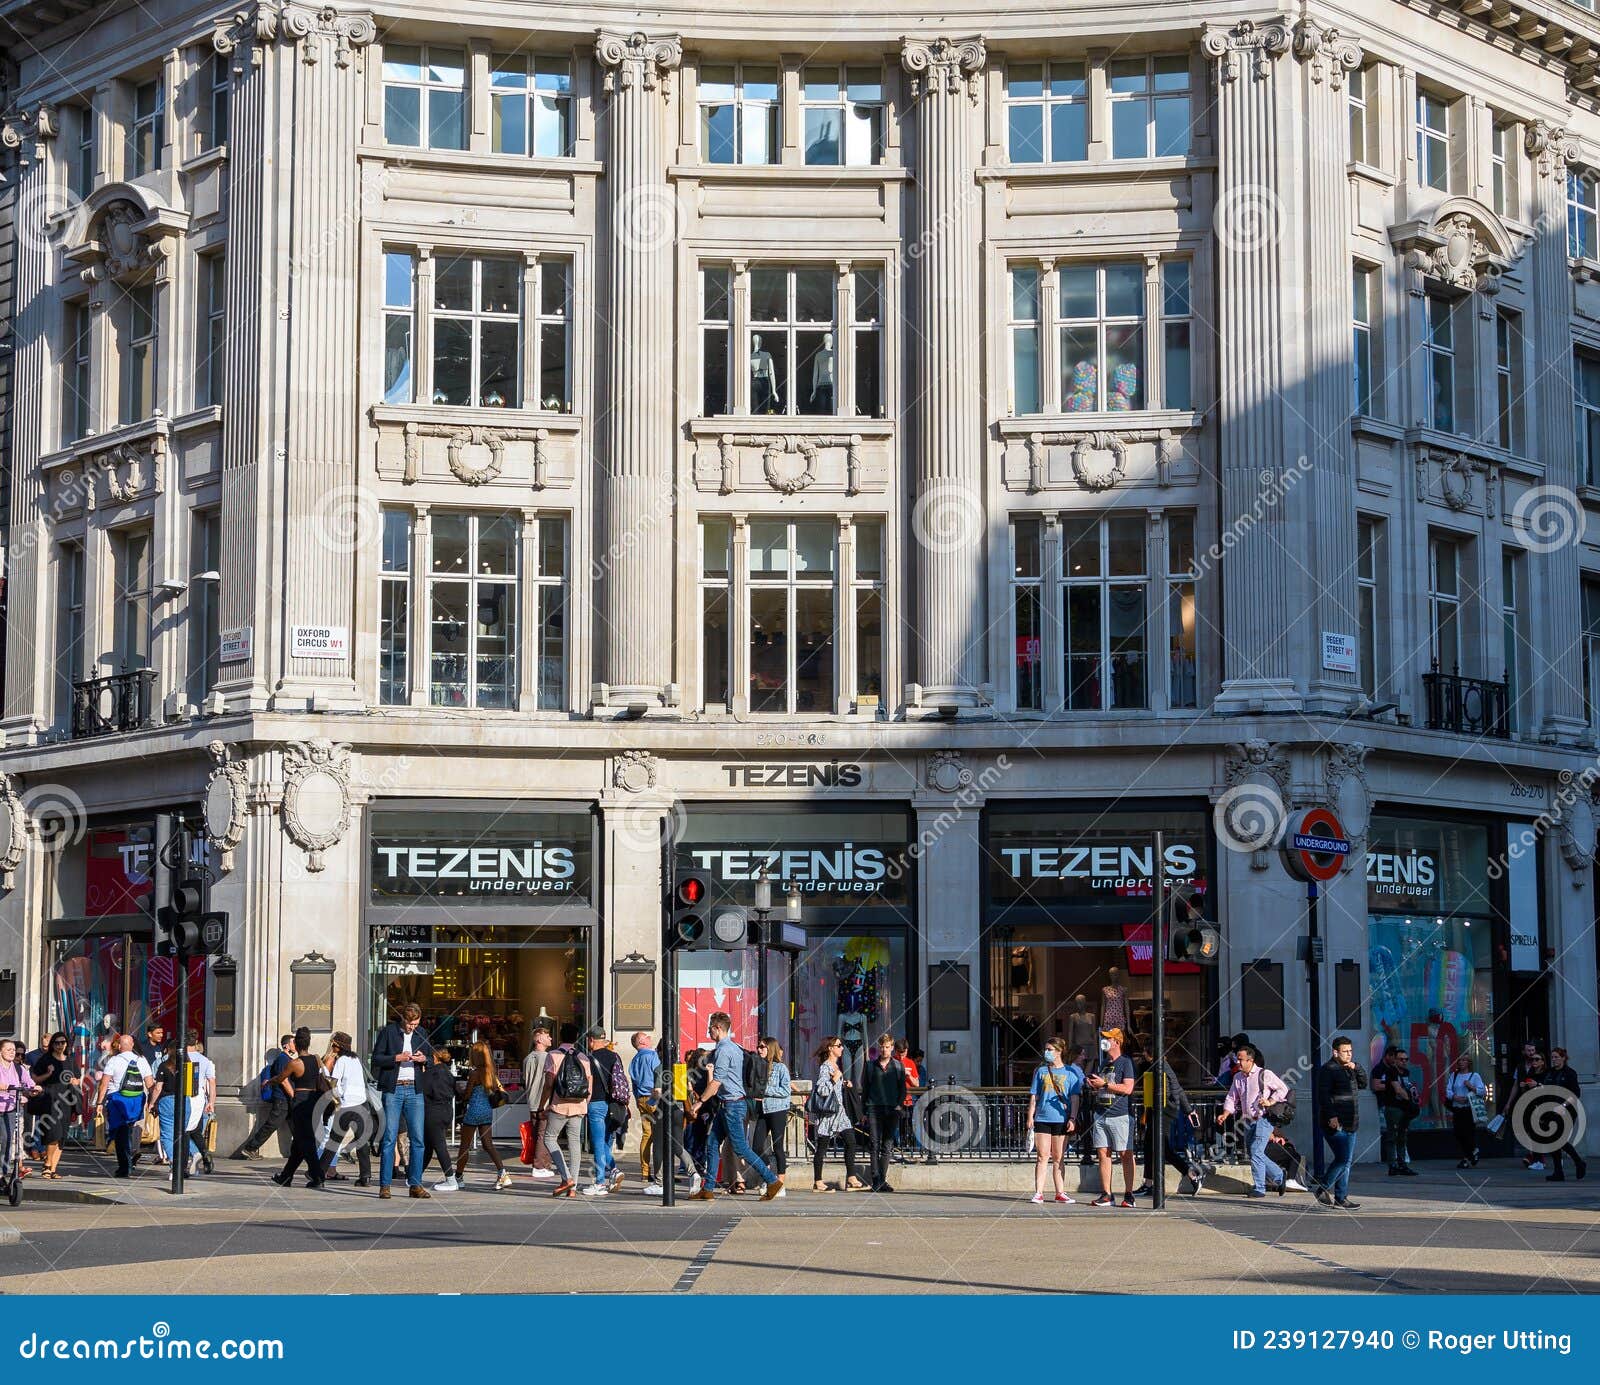 Tezenis Underwear Store London Editorial Image - Image of signage ...